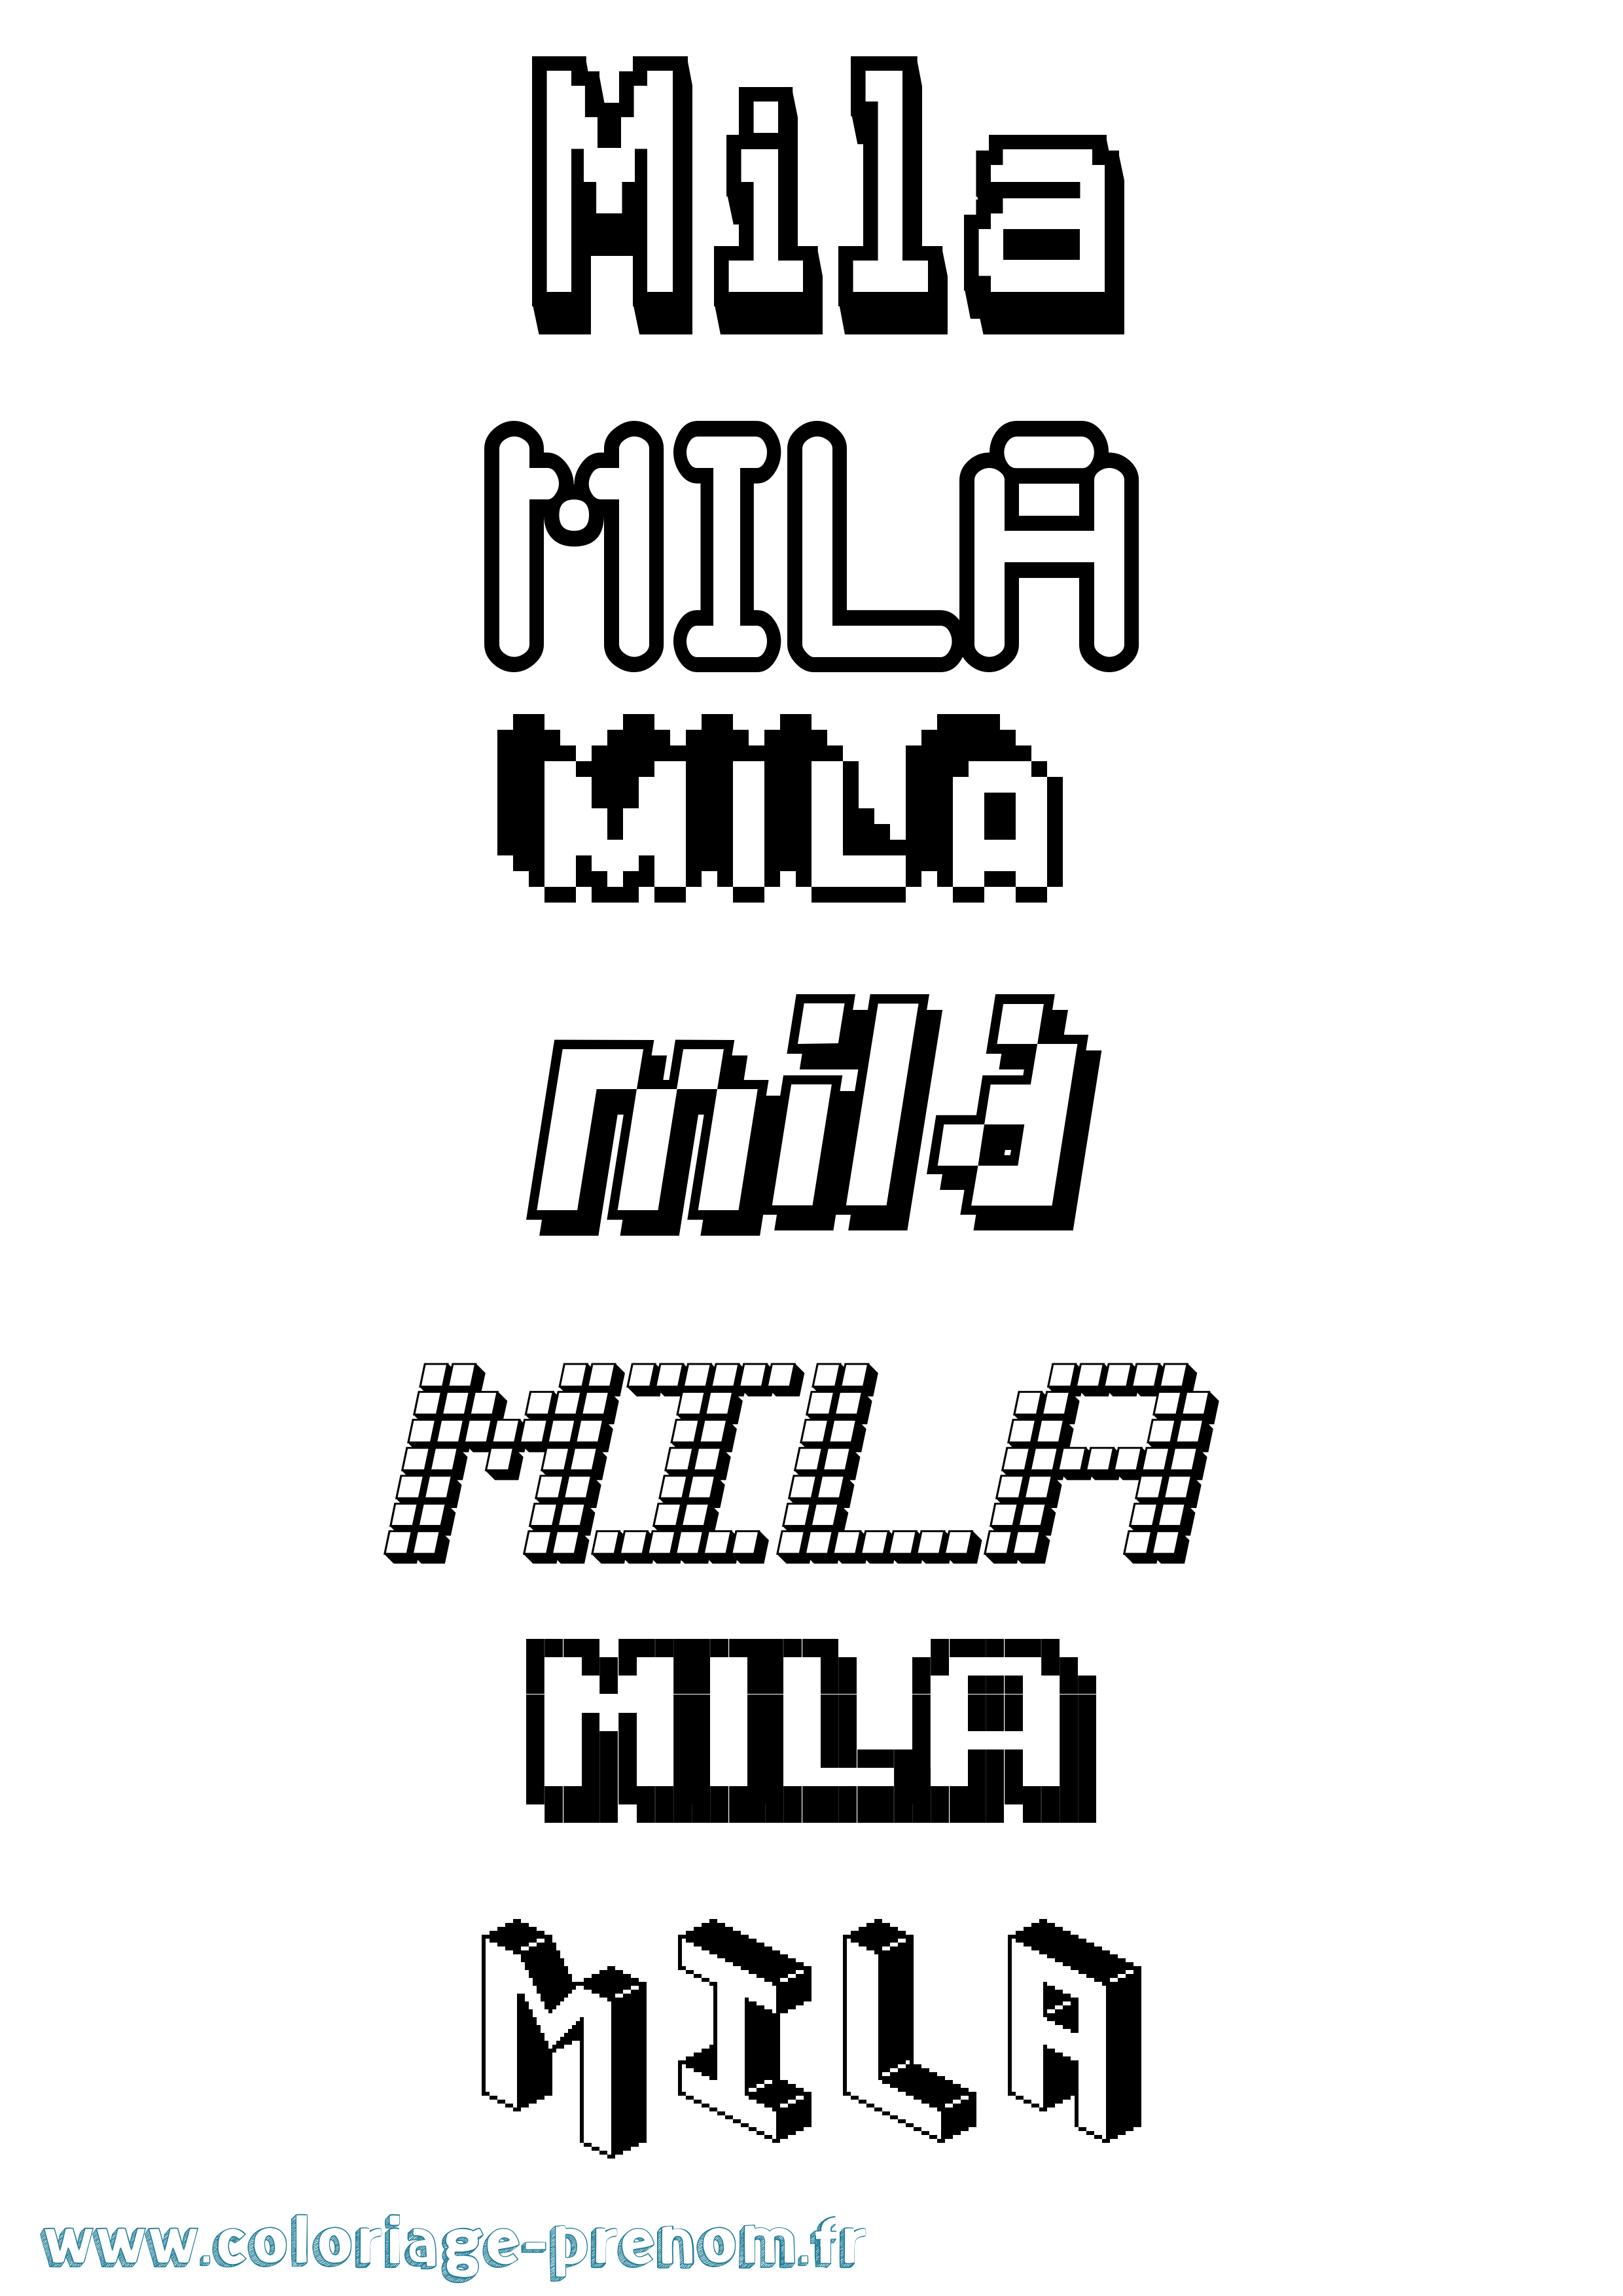 Coloriage prénom Mila